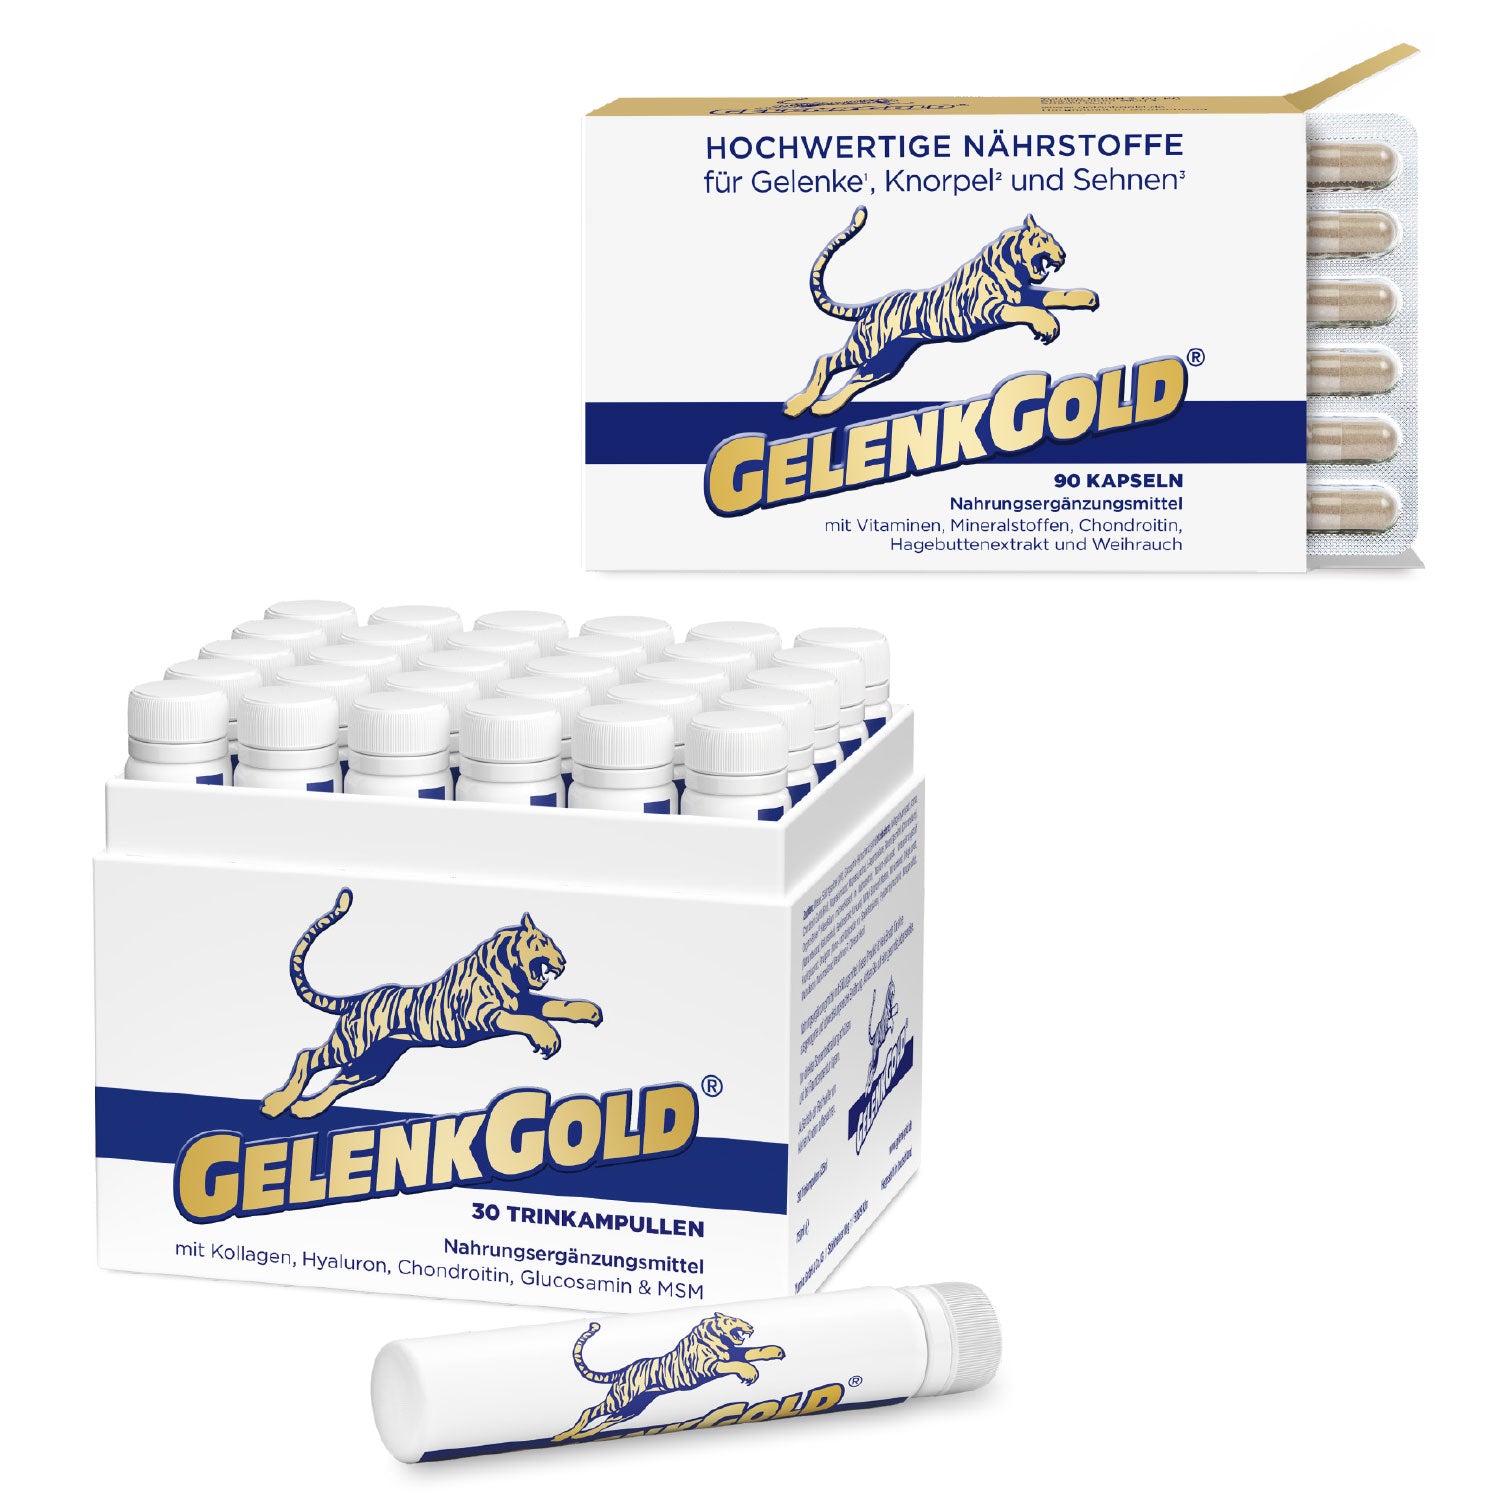 Starterpaket GelenkGold® Trinkampullen & Kapseln: Nahrungsergänzung für Gelenke